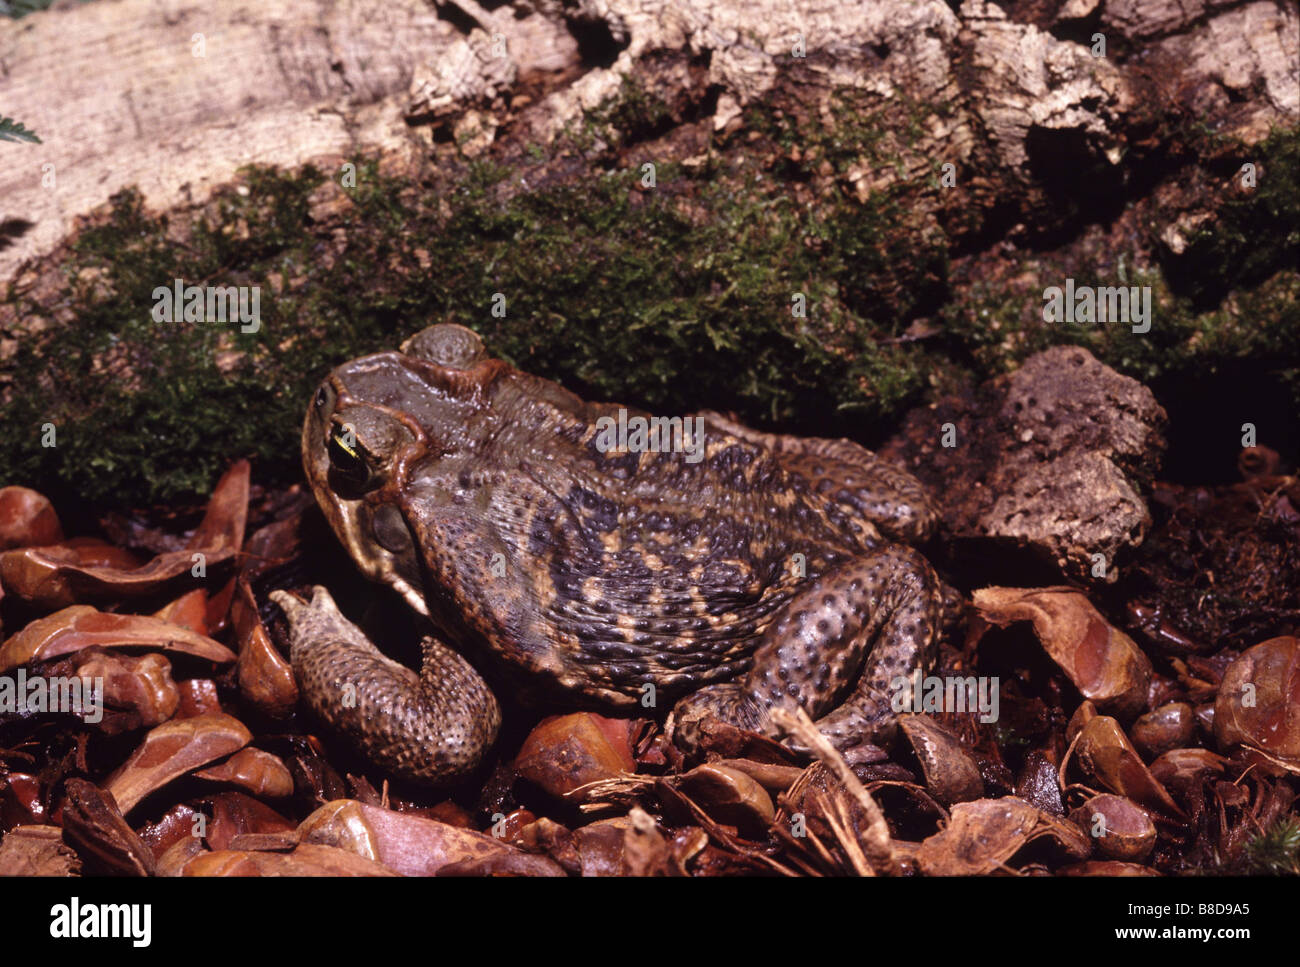 Chaunus marinus, Giant toad or Marine toad Stock Photo